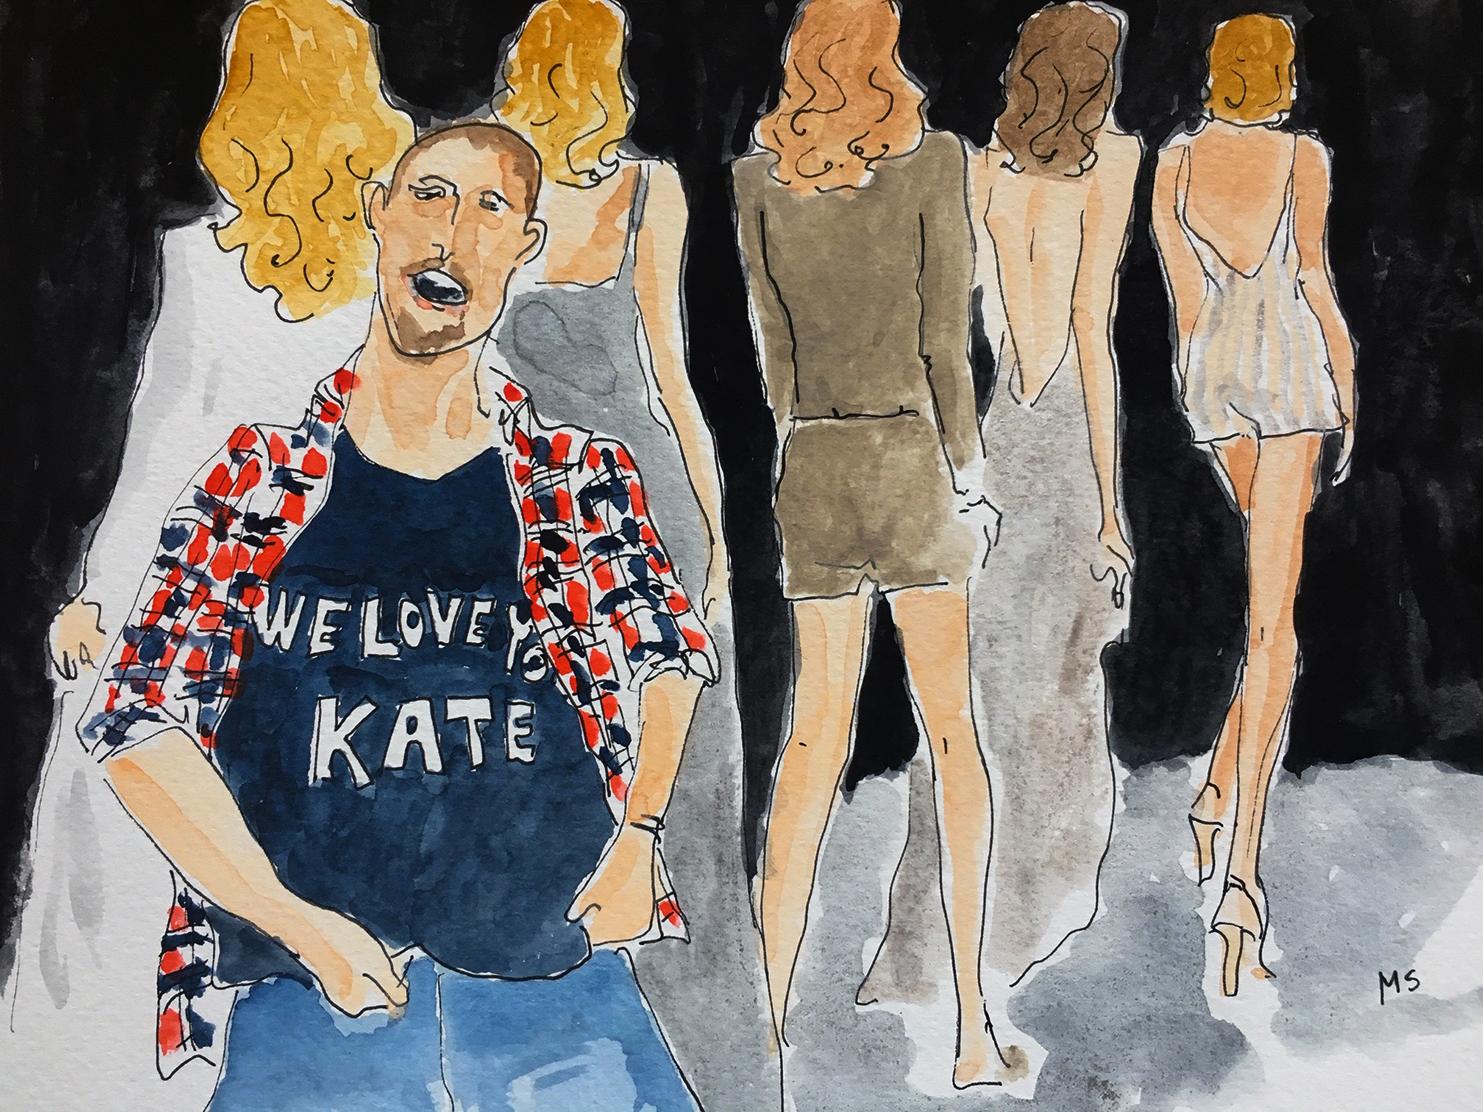 Fashion designer "Alexander McQueen/ wearing a We love Kate Moss" Tshirt